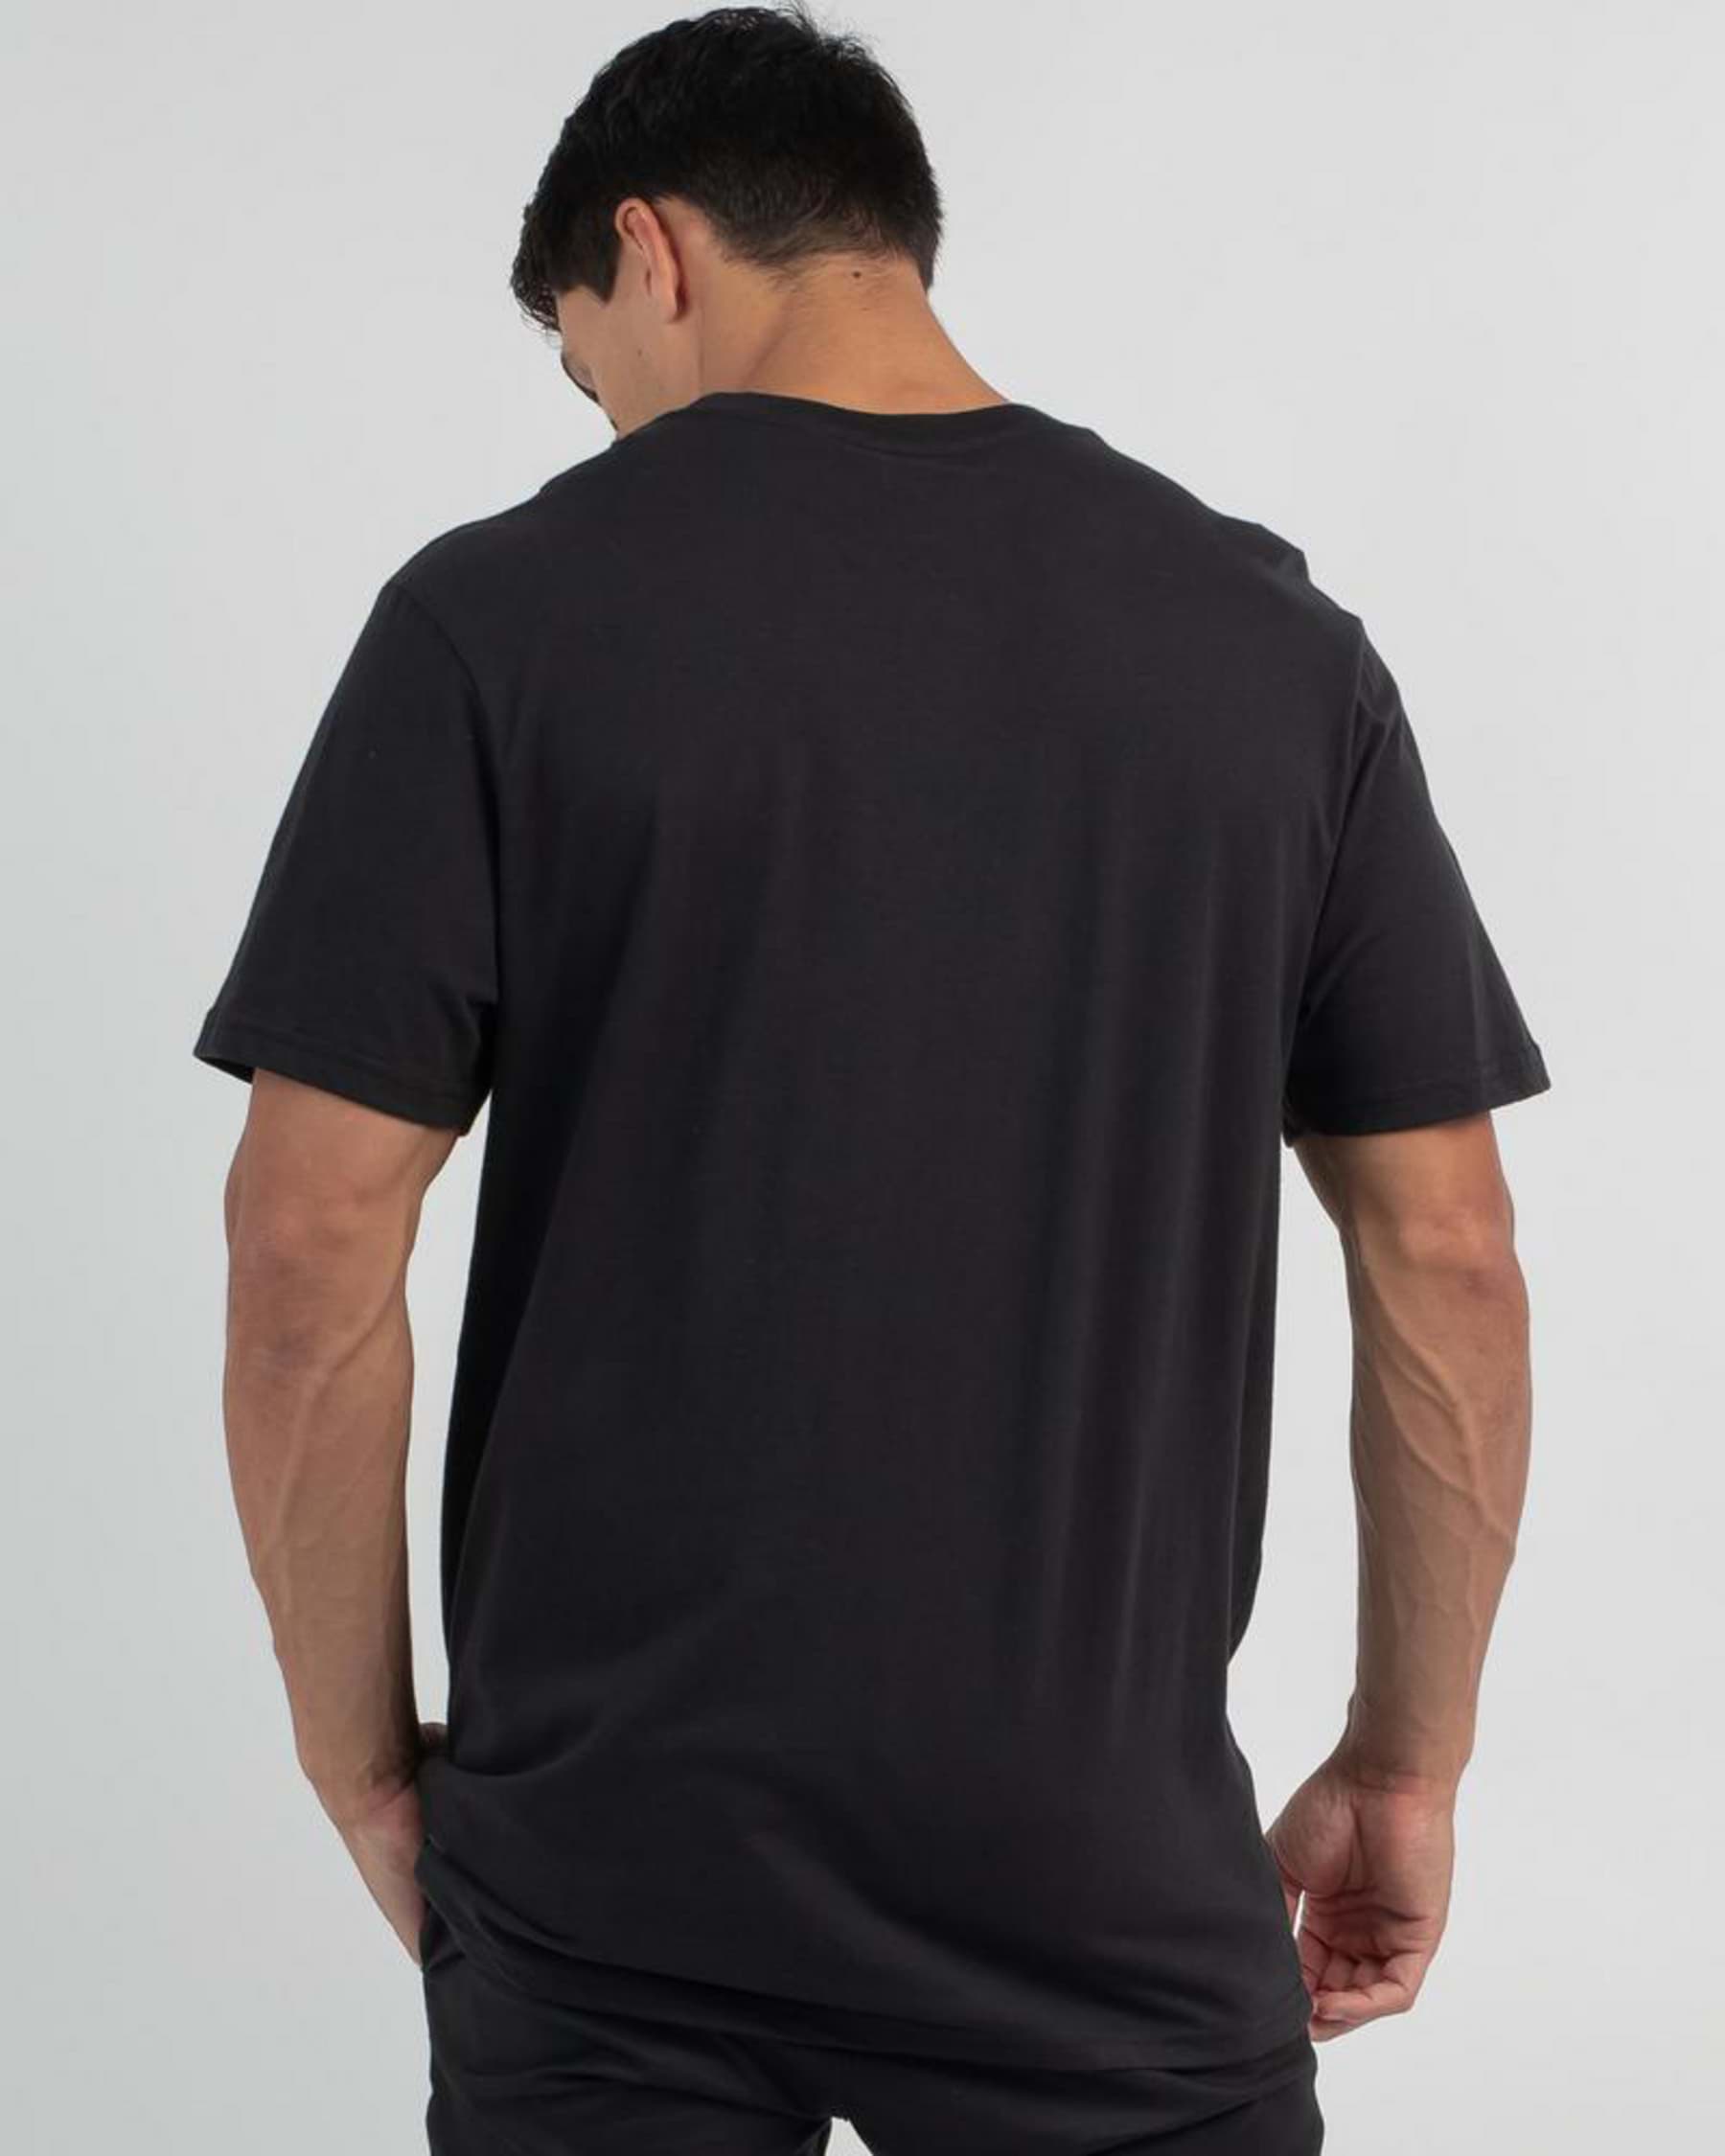 Fox Pinnacle T-Shirt In Black/white - Fast Shipping & Easy Returns ...